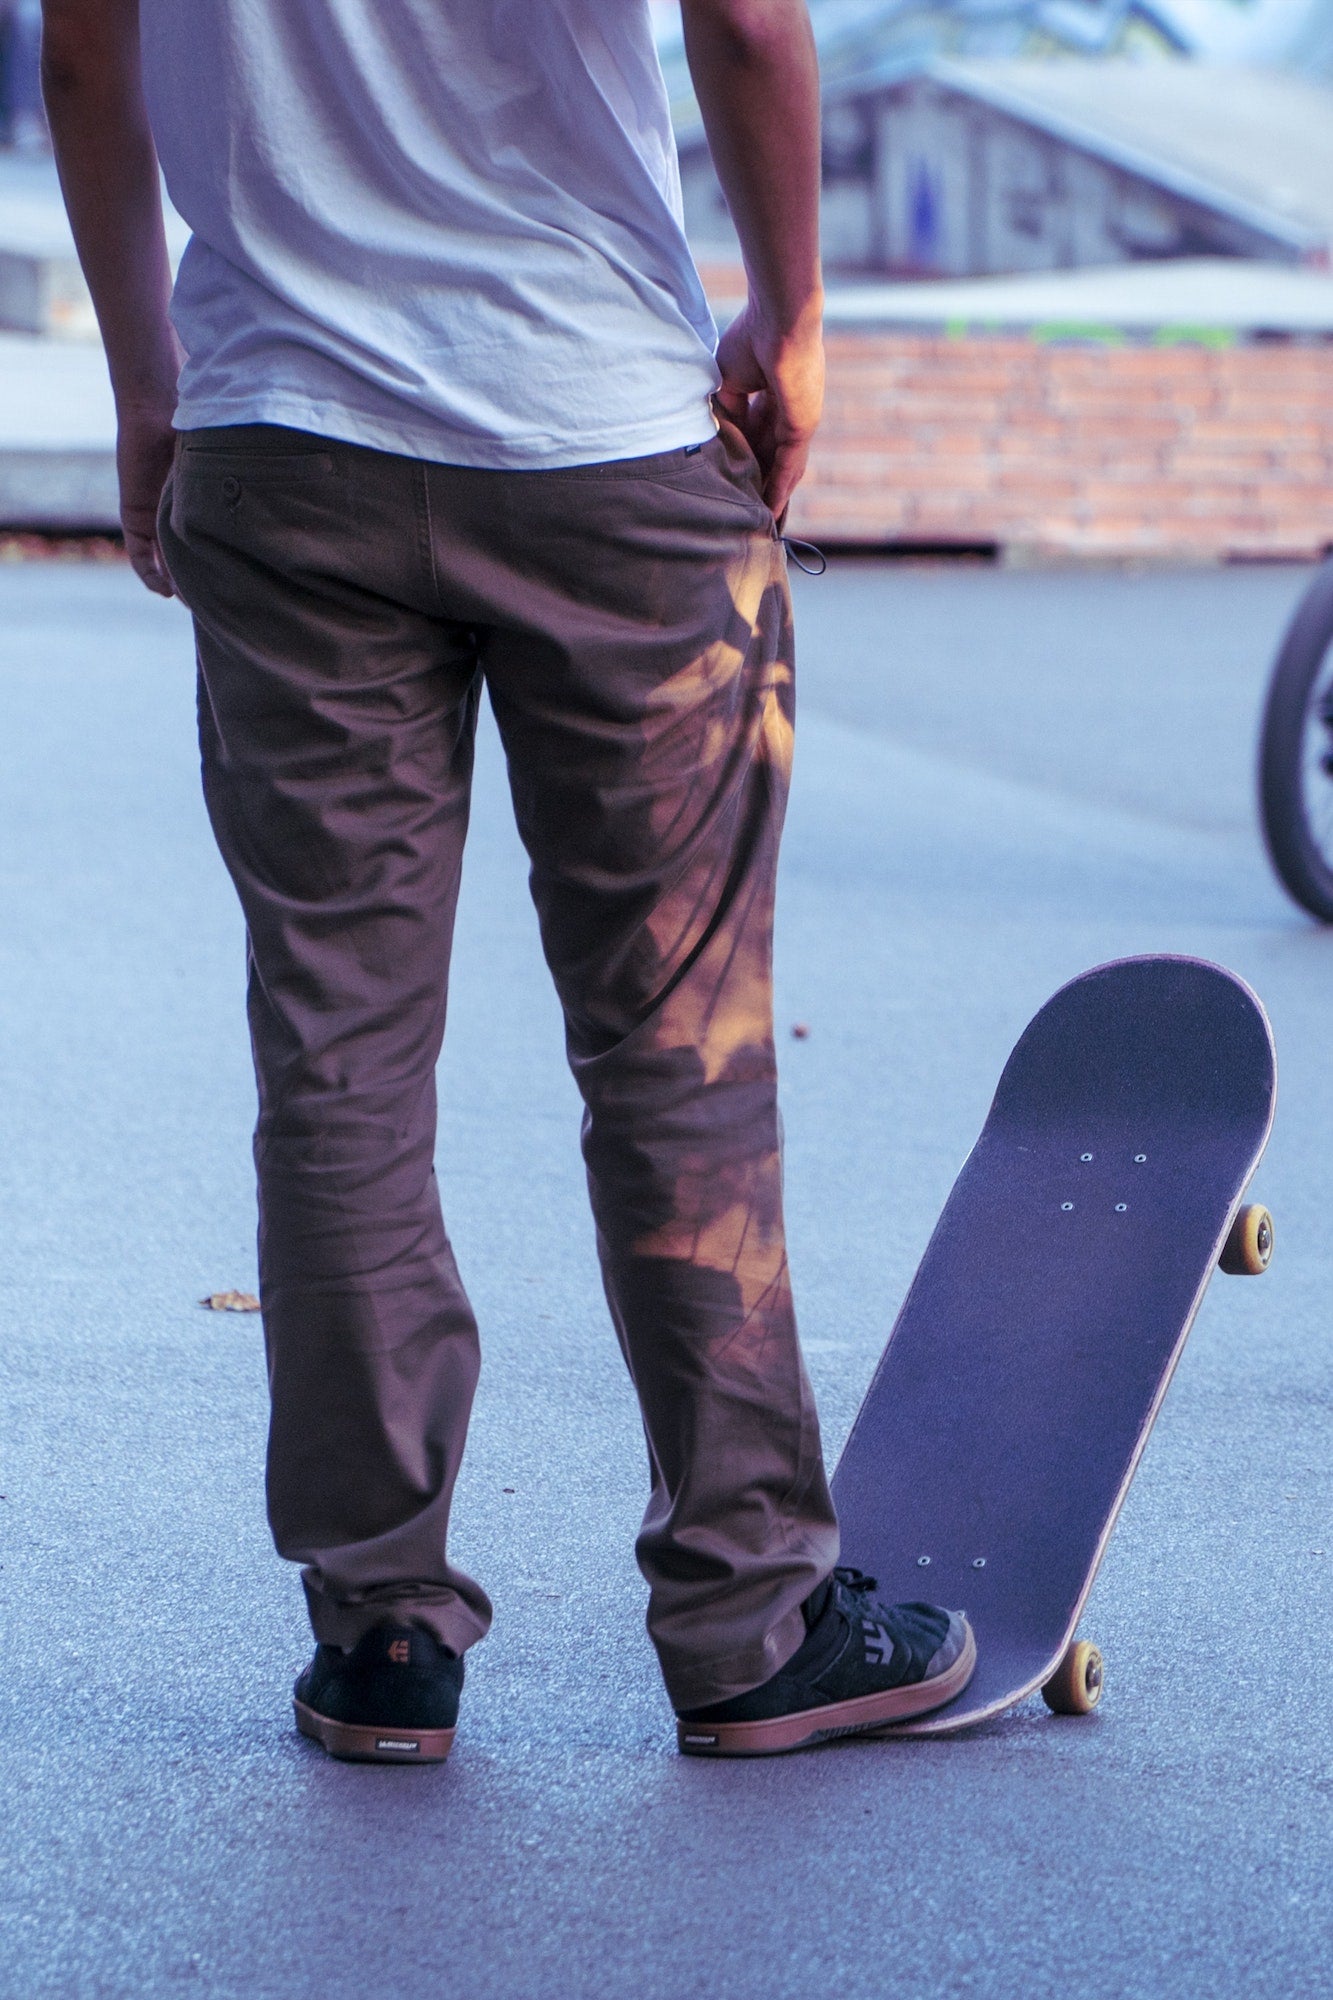 Skateboarder Holding Board